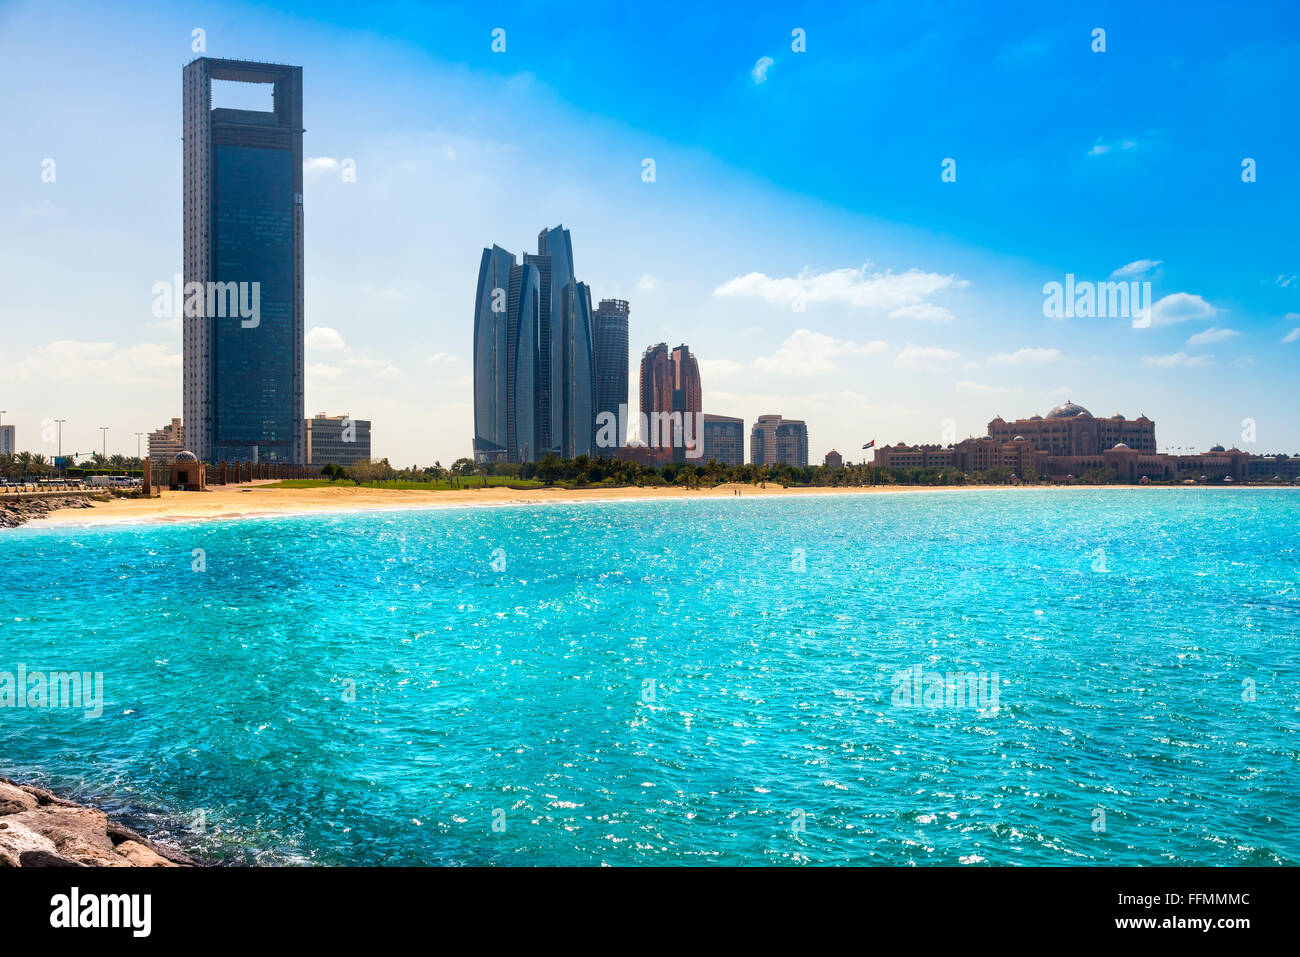 Abu Dhabi, Emirates Palace and skyscraper on the beach. UAE Stock Photo